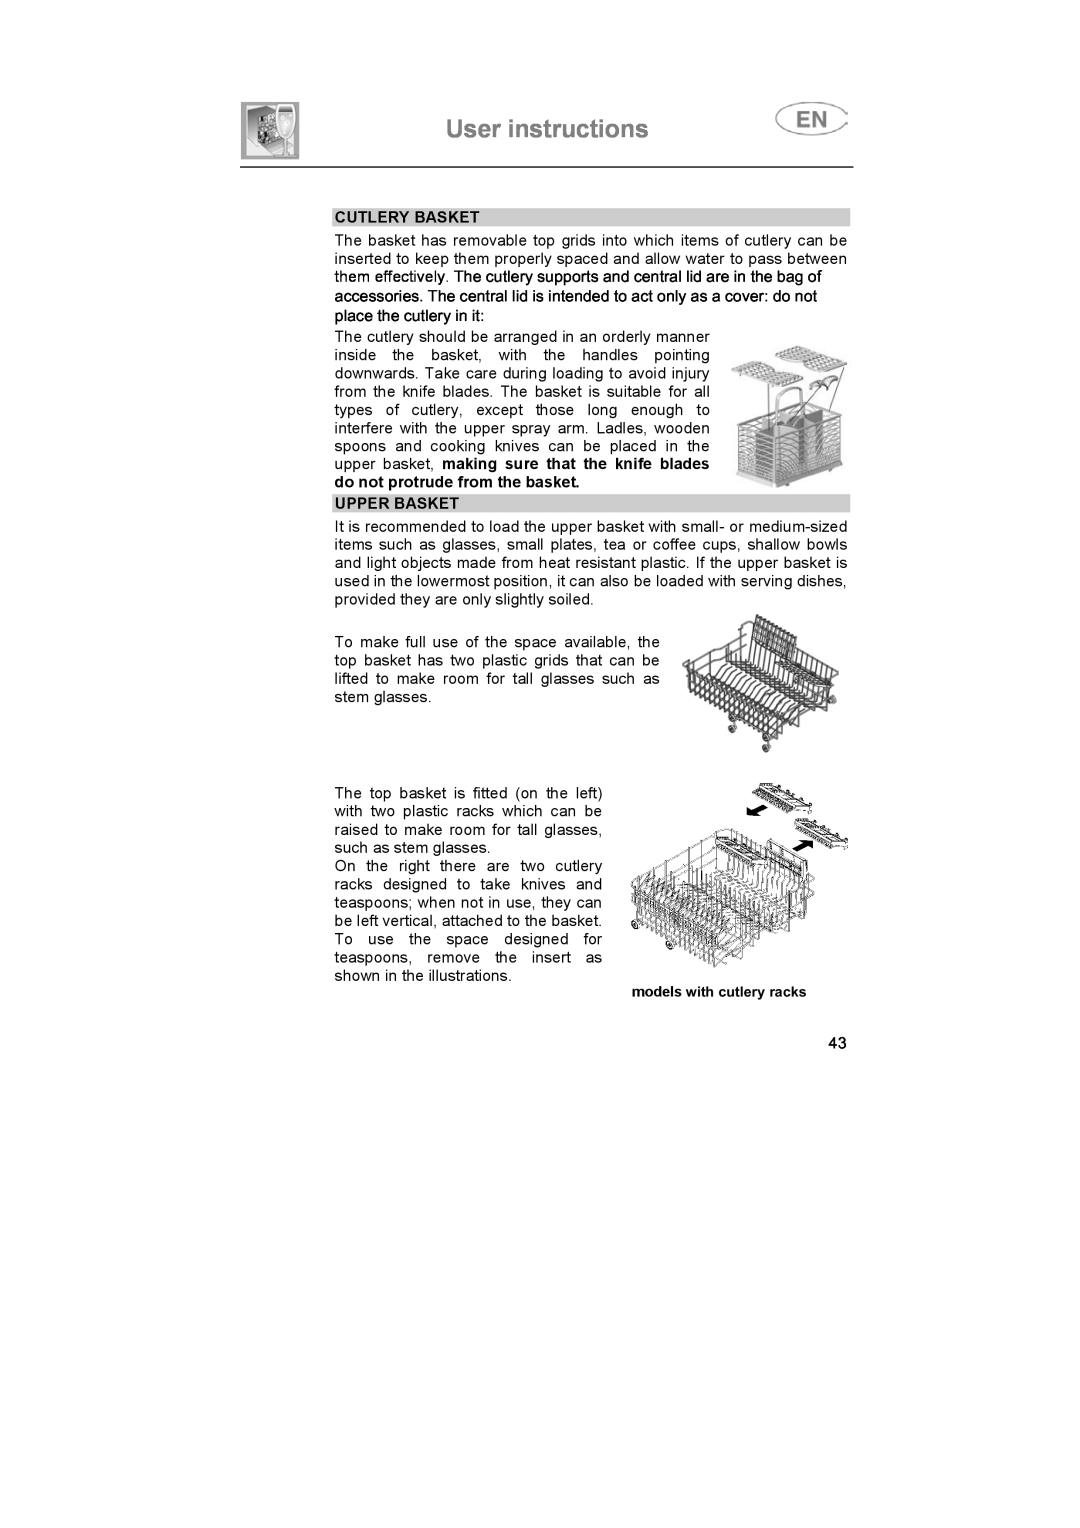 CDA VW80 manual Cutlery Basket, Upper Basket, User instructions, models with cutlery racks 